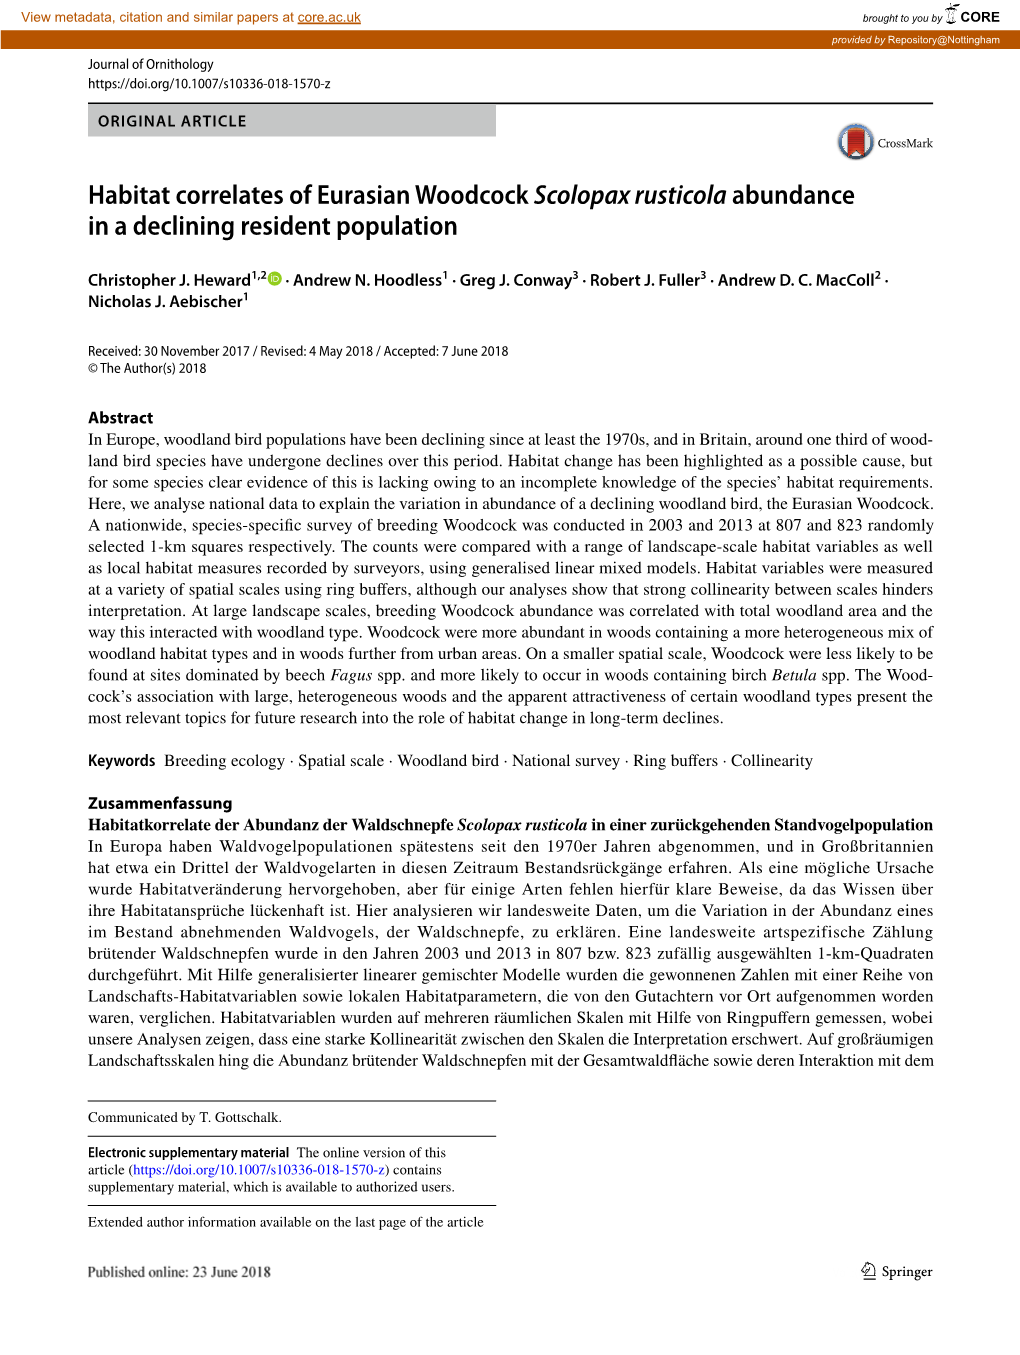 Habitat Correlates of Eurasian Woodcock Scolopax Rusticola Abundance in a Declining Resident Population